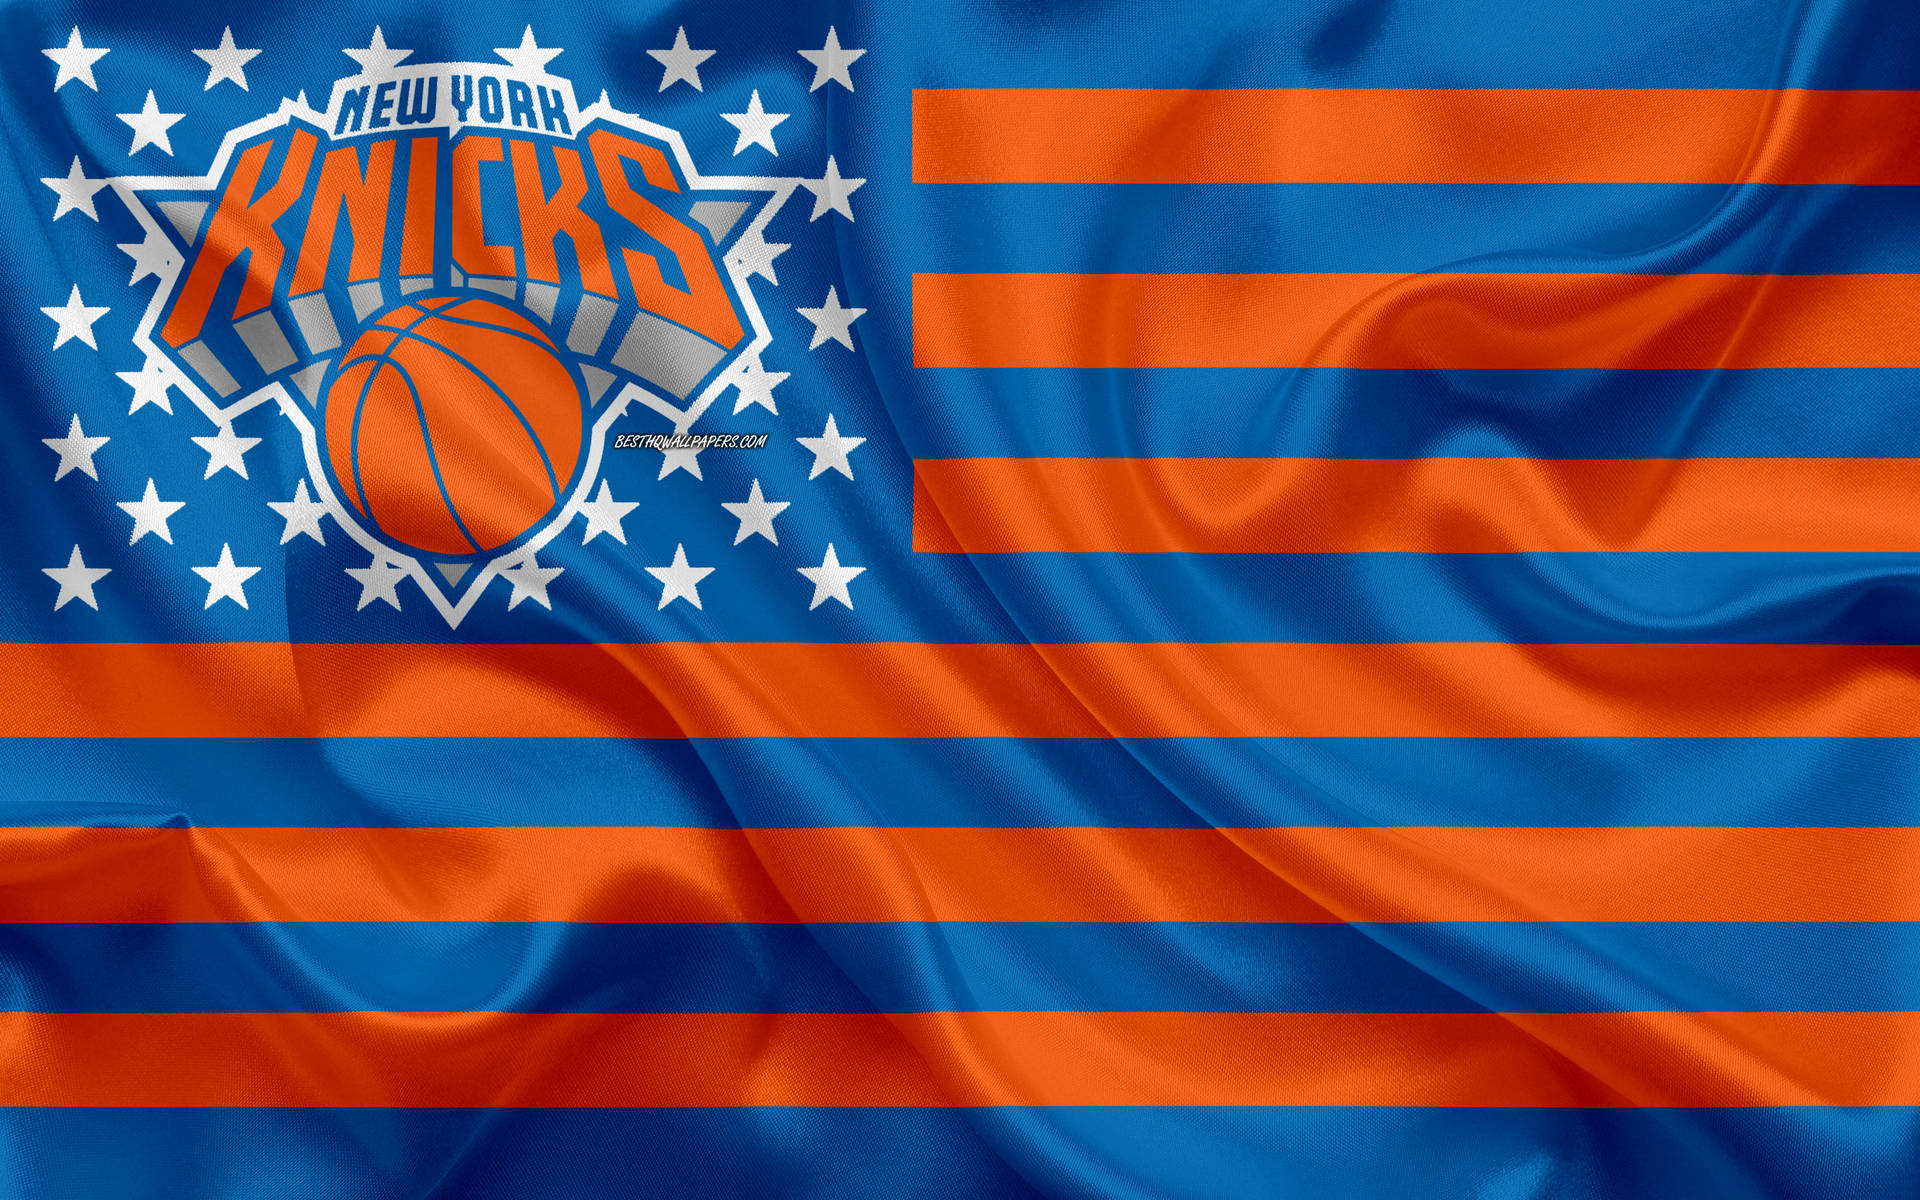 New York Knicks Team Flag Background